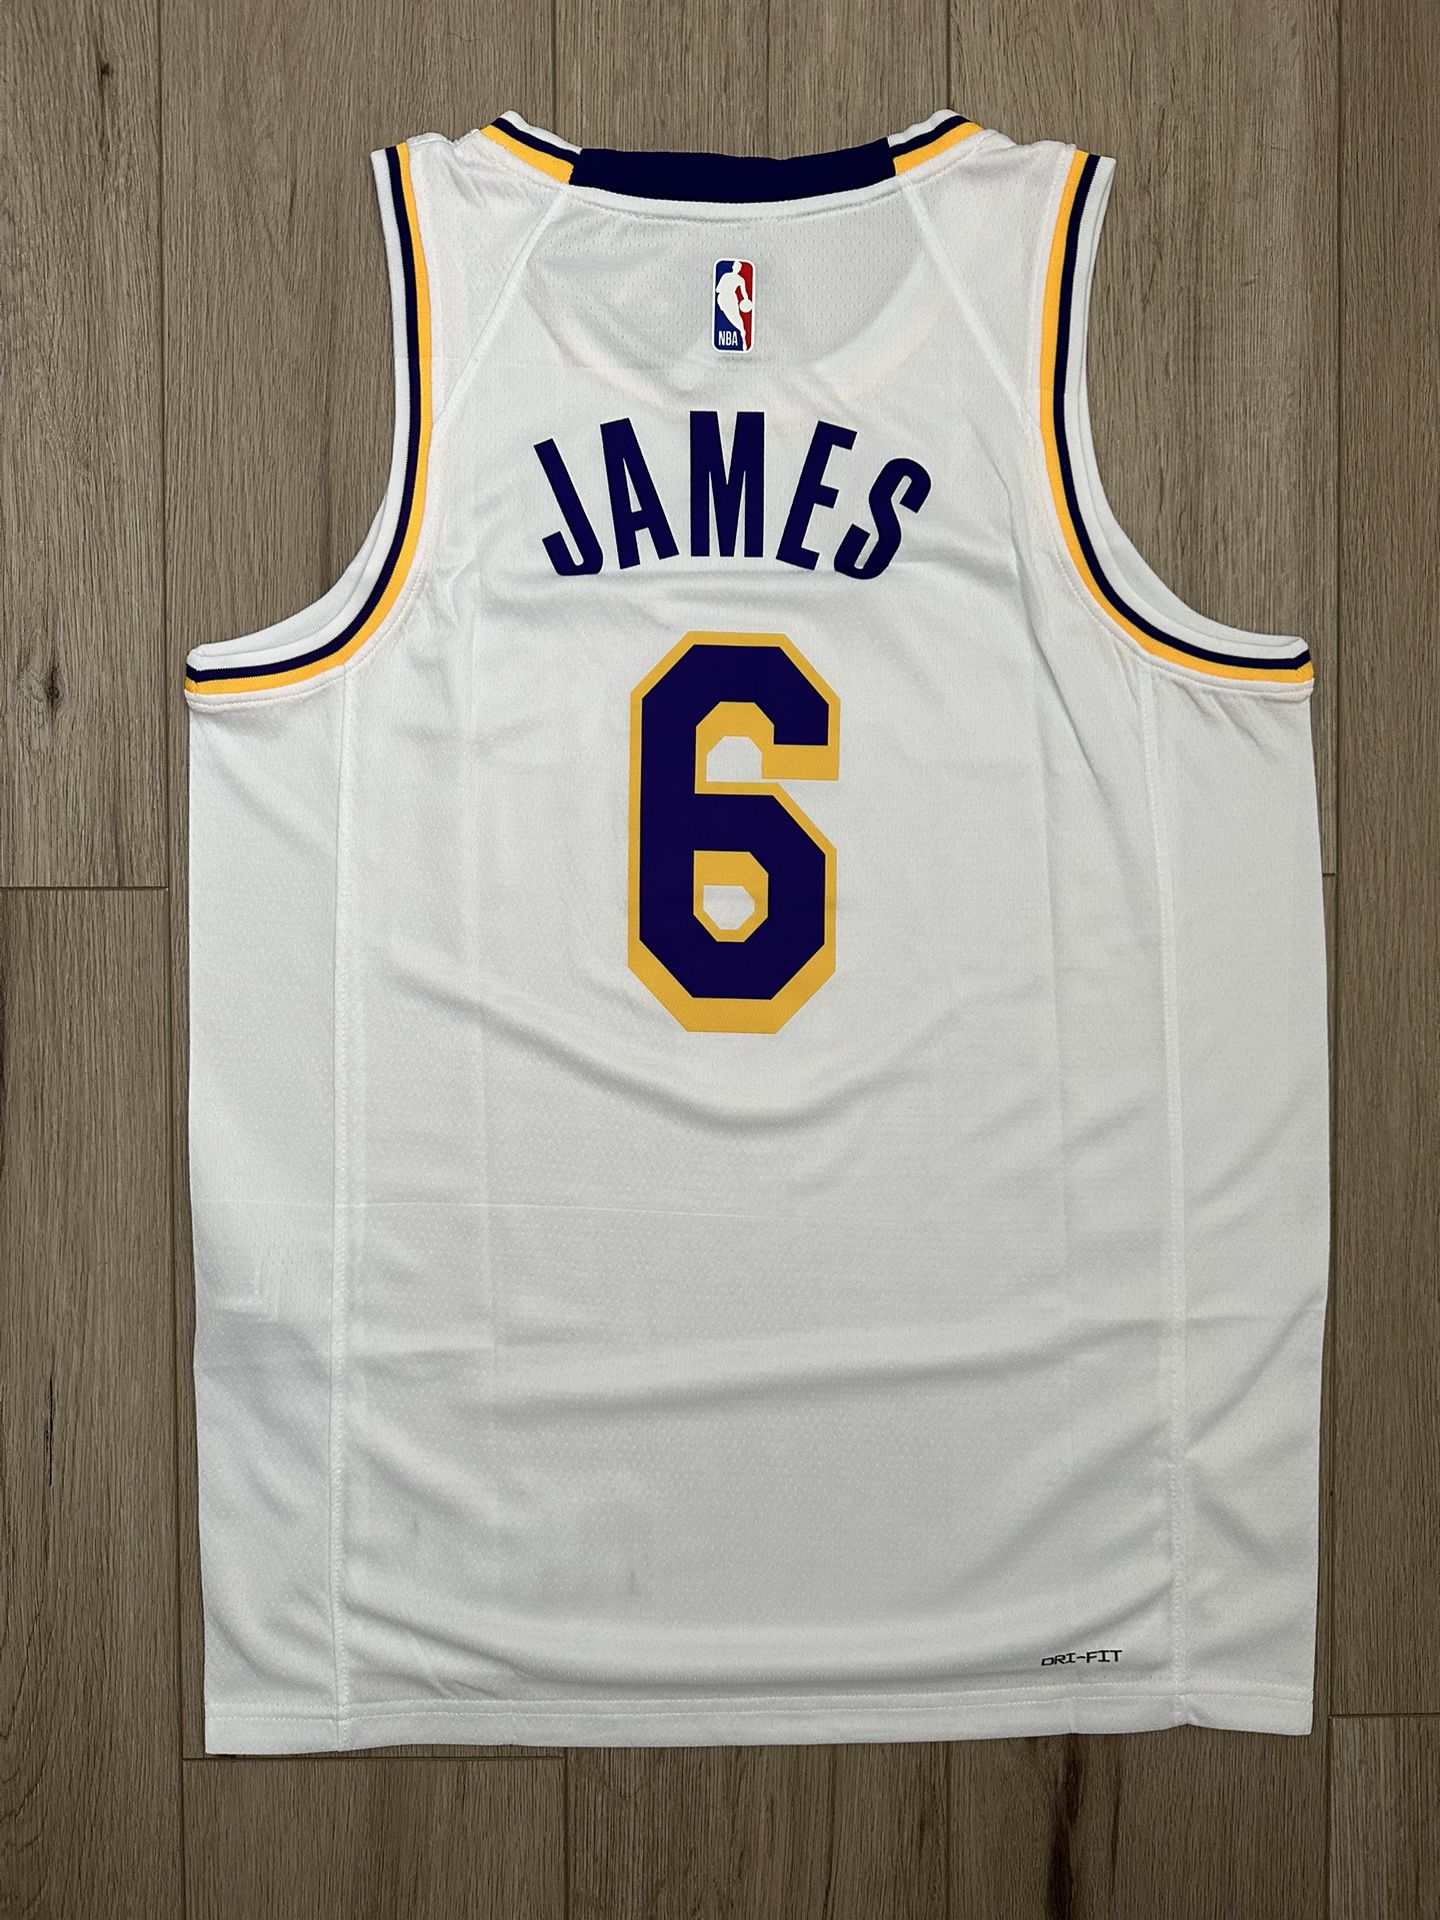 US$ 26.00 - 22-23 HEAT JAMES #6 White Top Quality Hot Pressing NBA